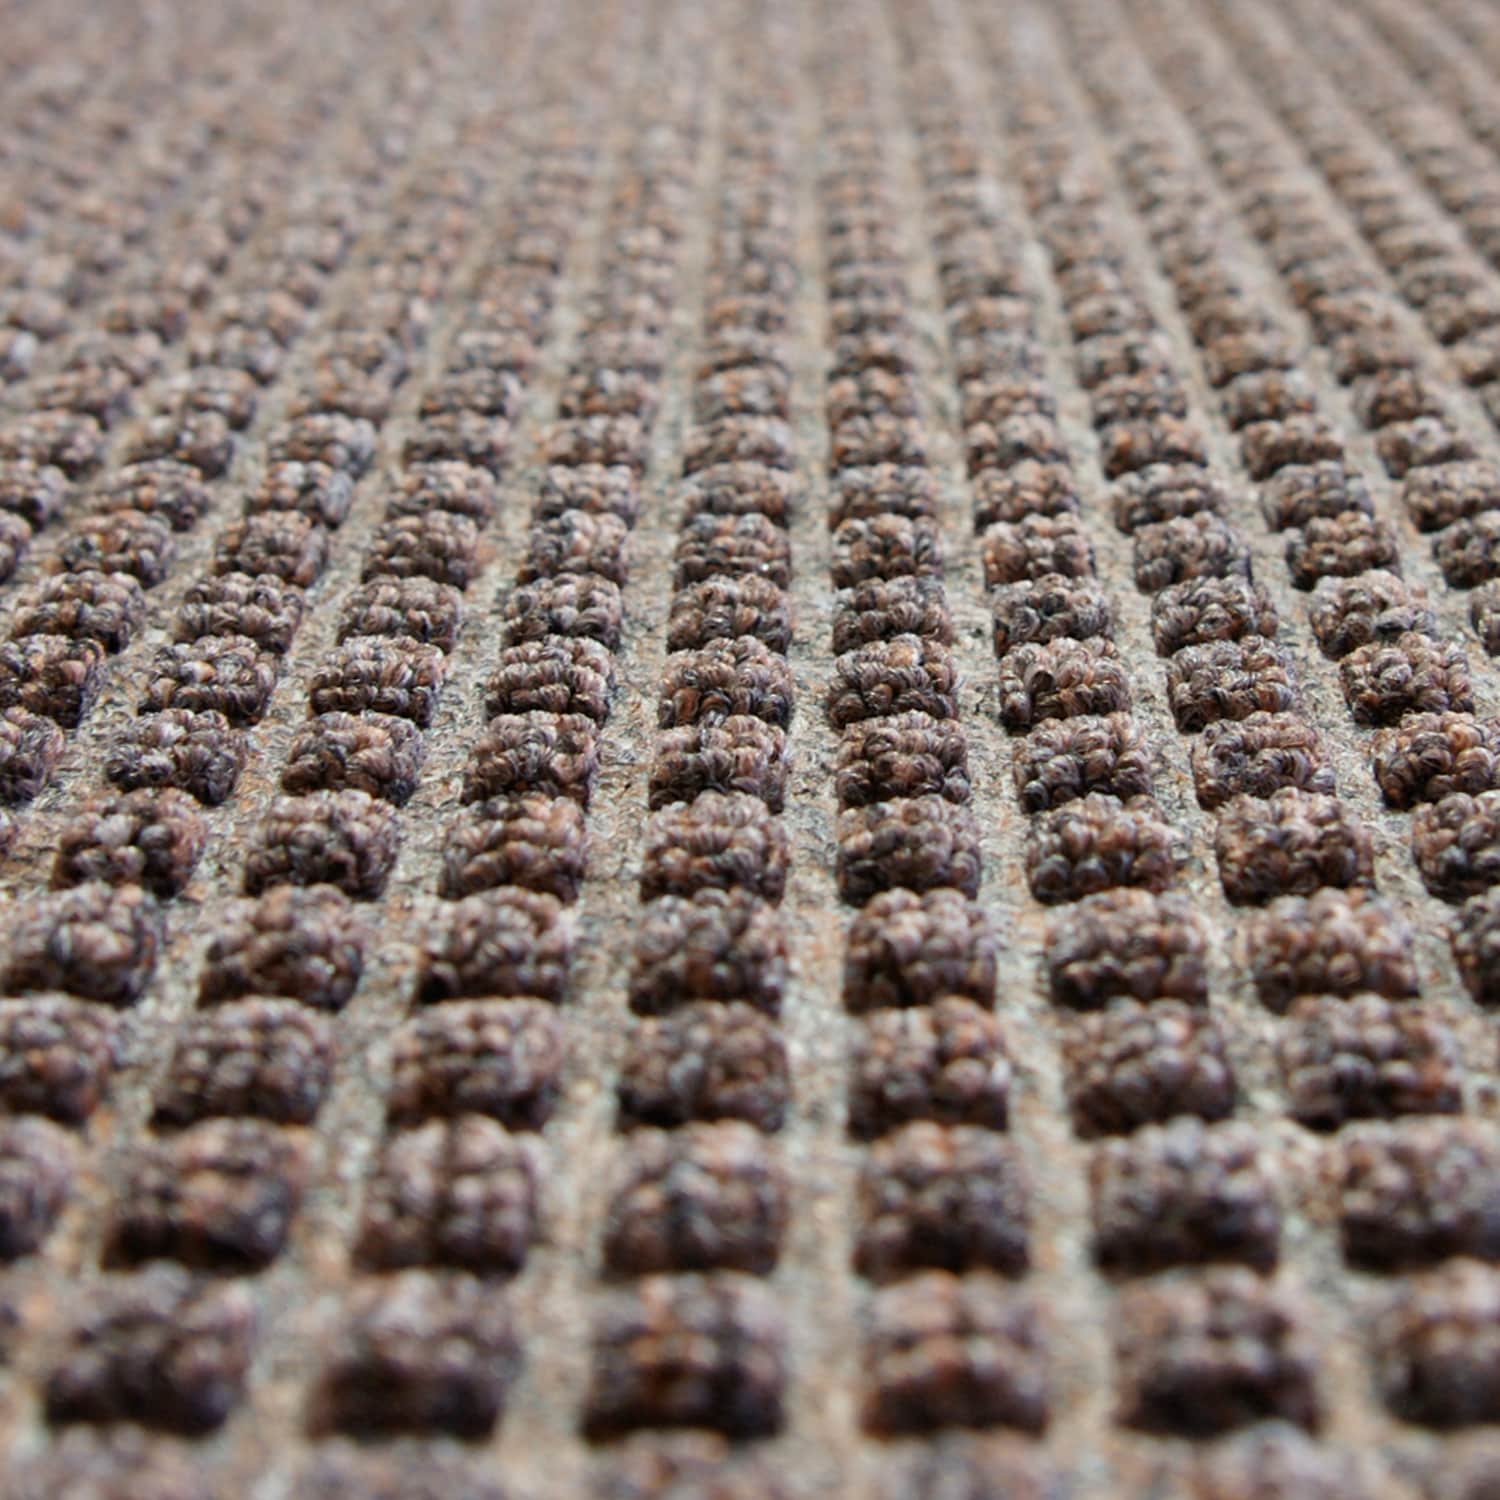 Wellington Rubber Backed Carpet Mats